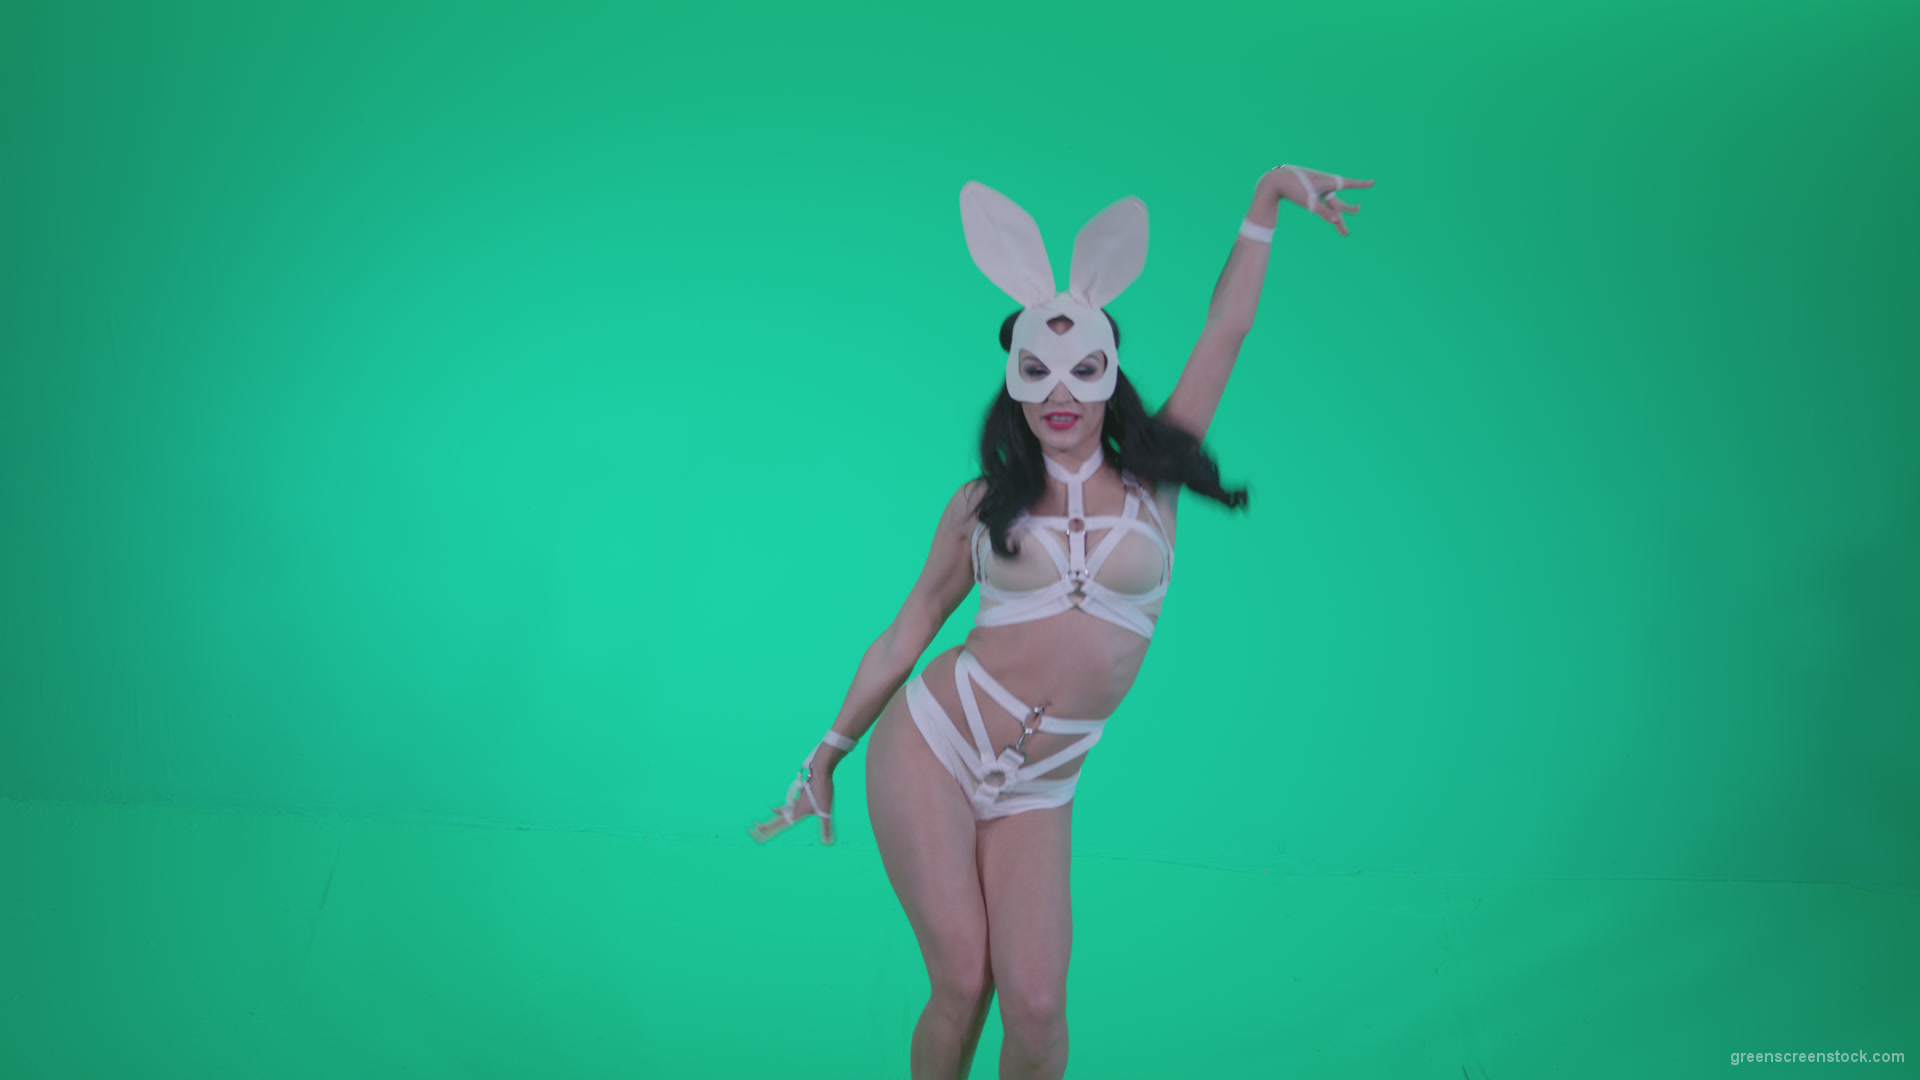 Go-go-Dancer-White-Rabbit-m9-Green-Screen-Video-Footage_006 Green Screen Stock